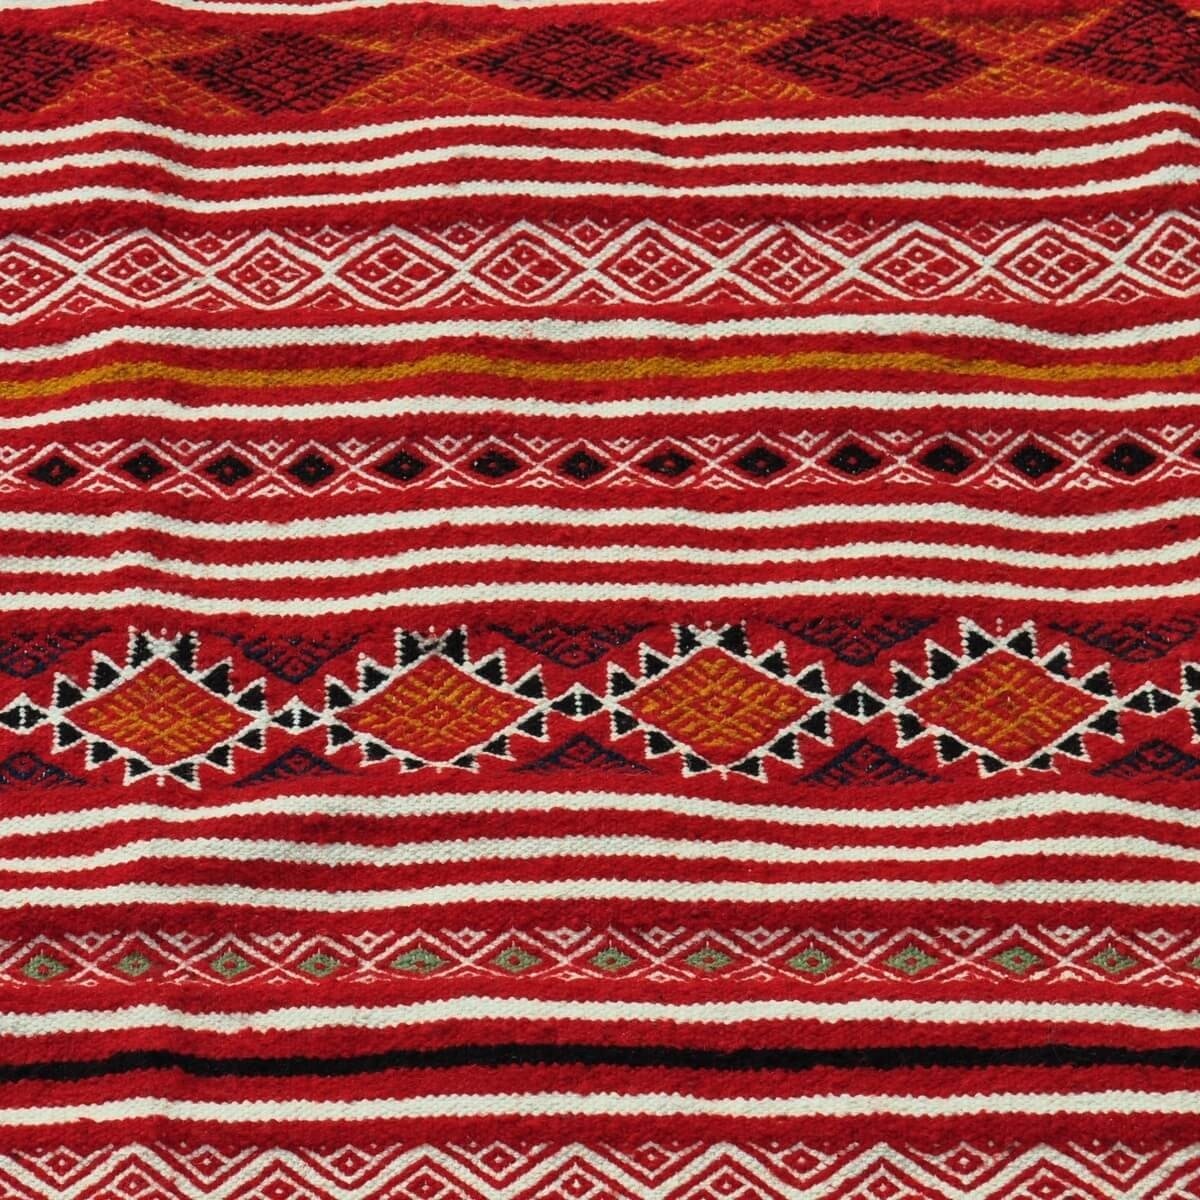 Tapete berbere Tapete Kilim Driba 110x210 Vermelho/Laranja (Tecidos à mão, Lã, Tunísia) Tapete tunisiano kilim, estilo marroquin